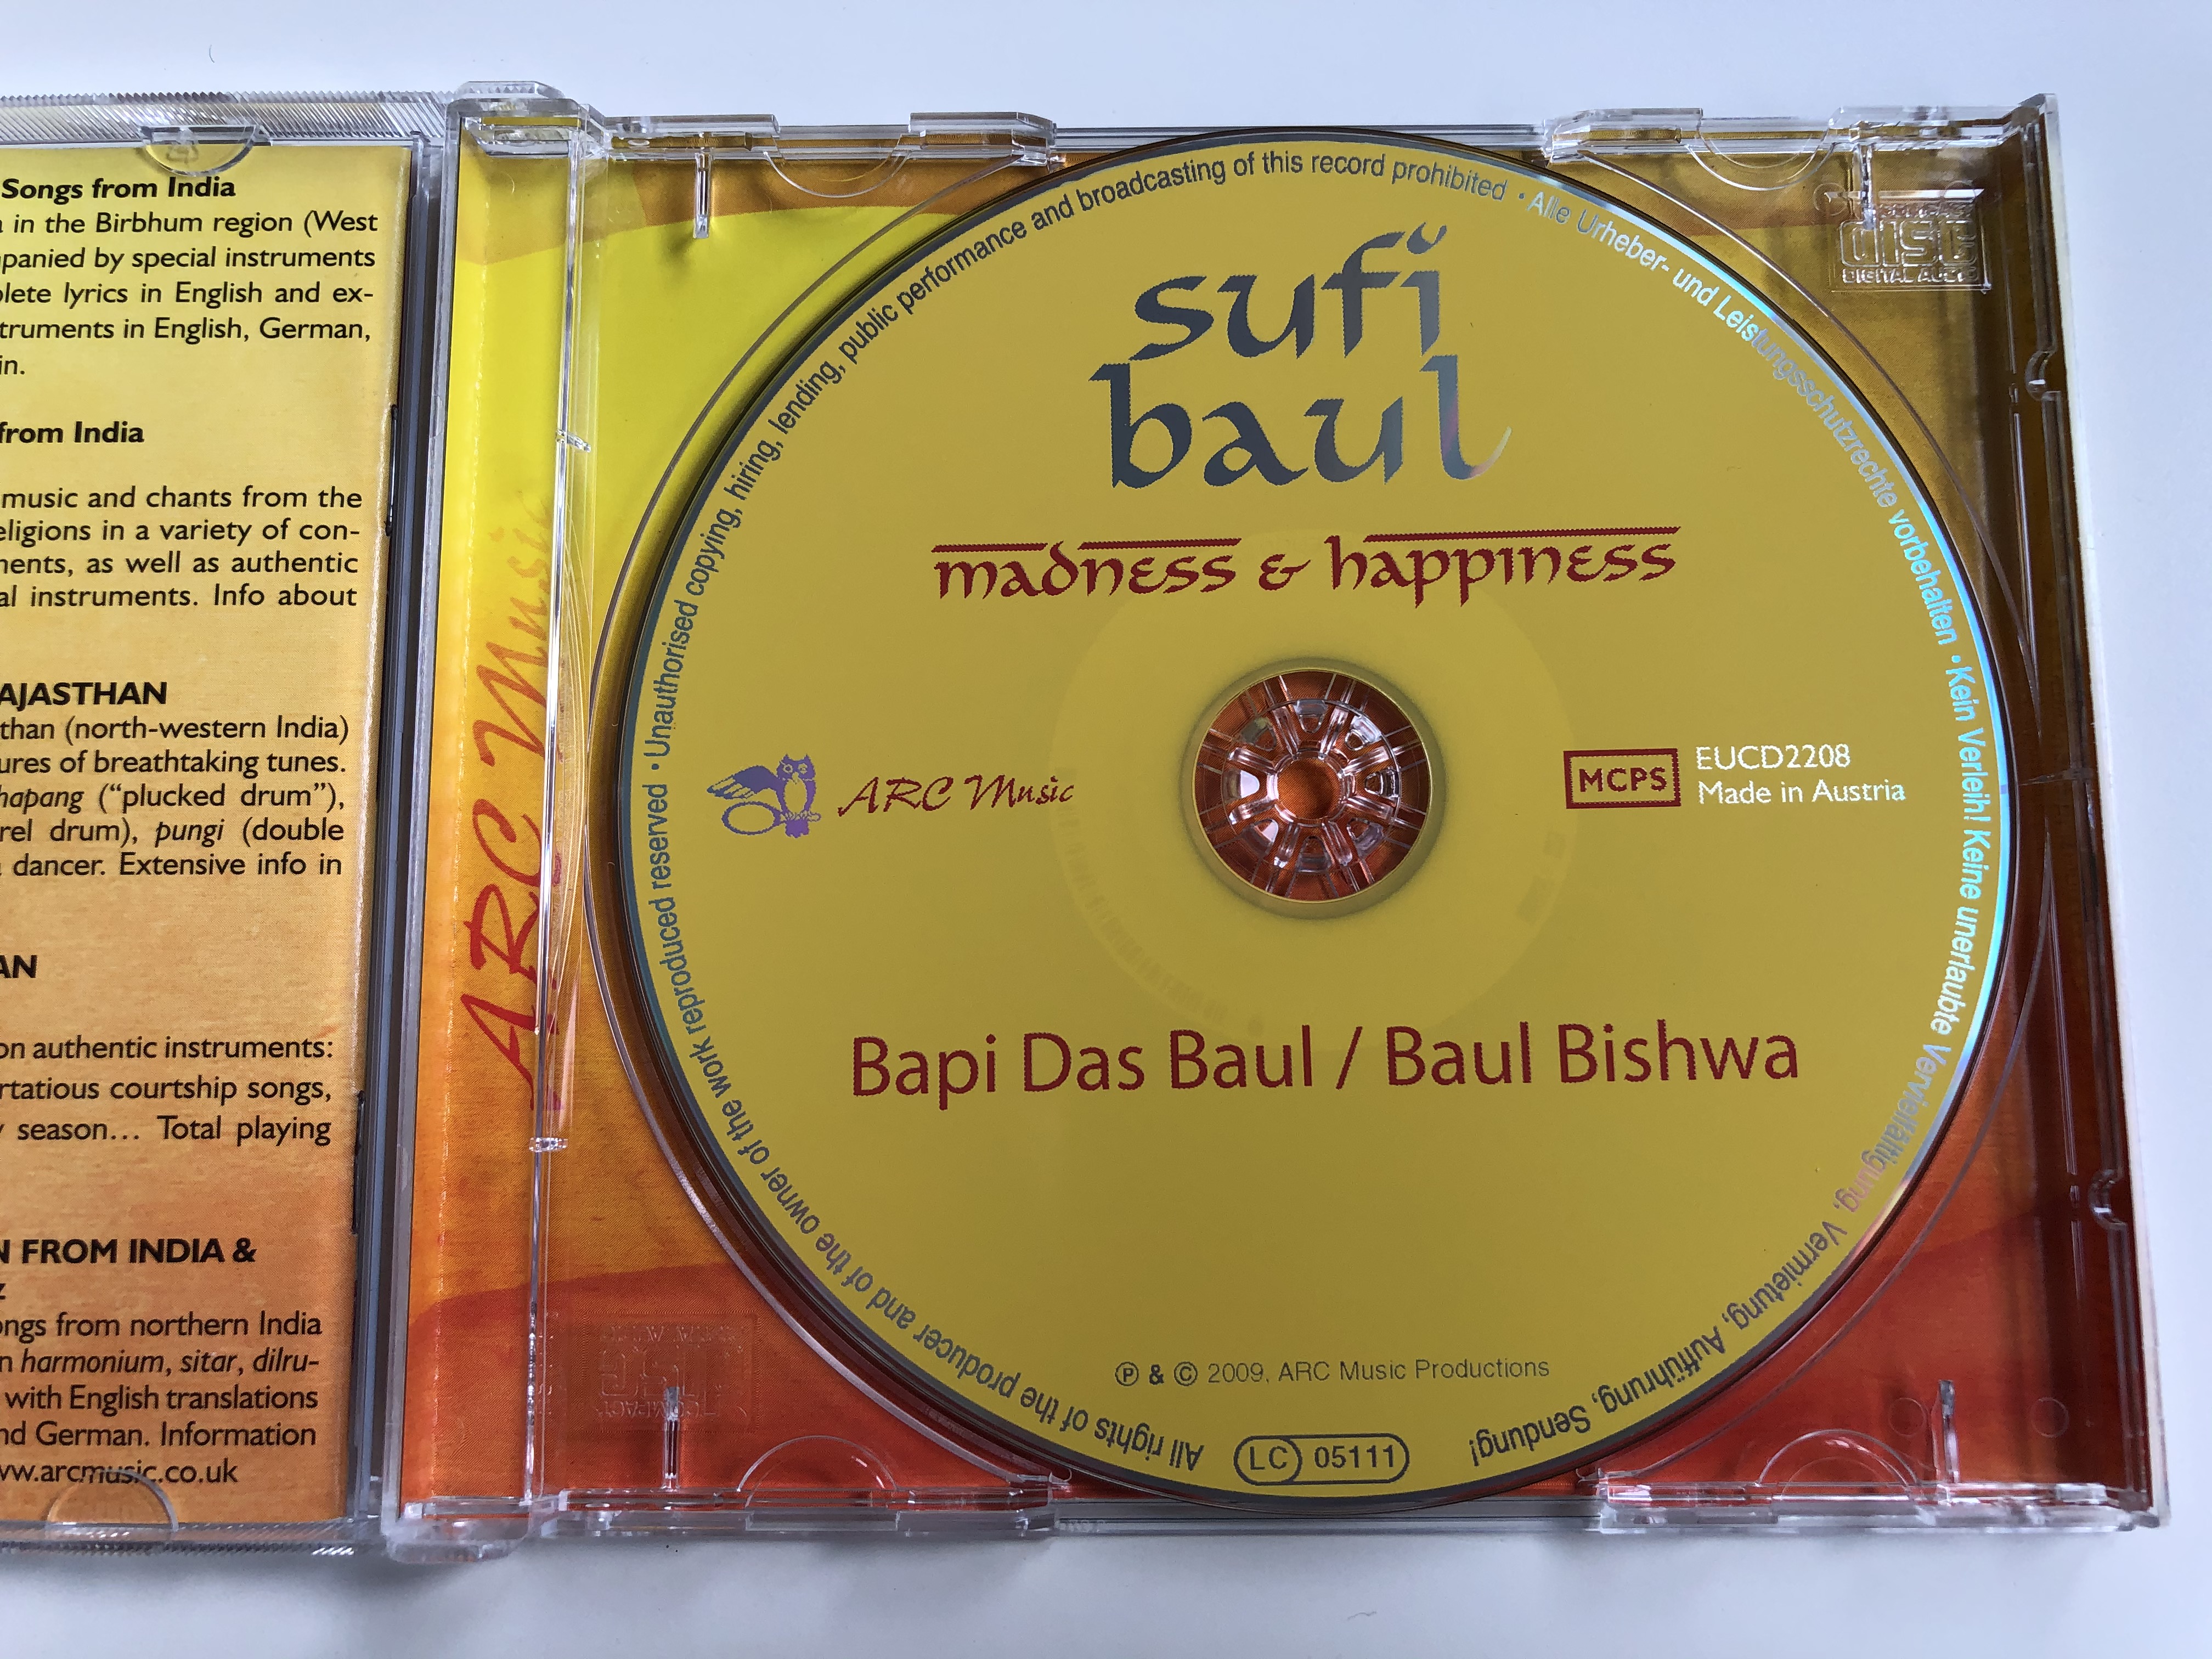 sufi-baul-madness-happiness-bapi-das-baul-baul-bishwa-arc-music-audio-cd-2009-eucd-2208-6-.jpg